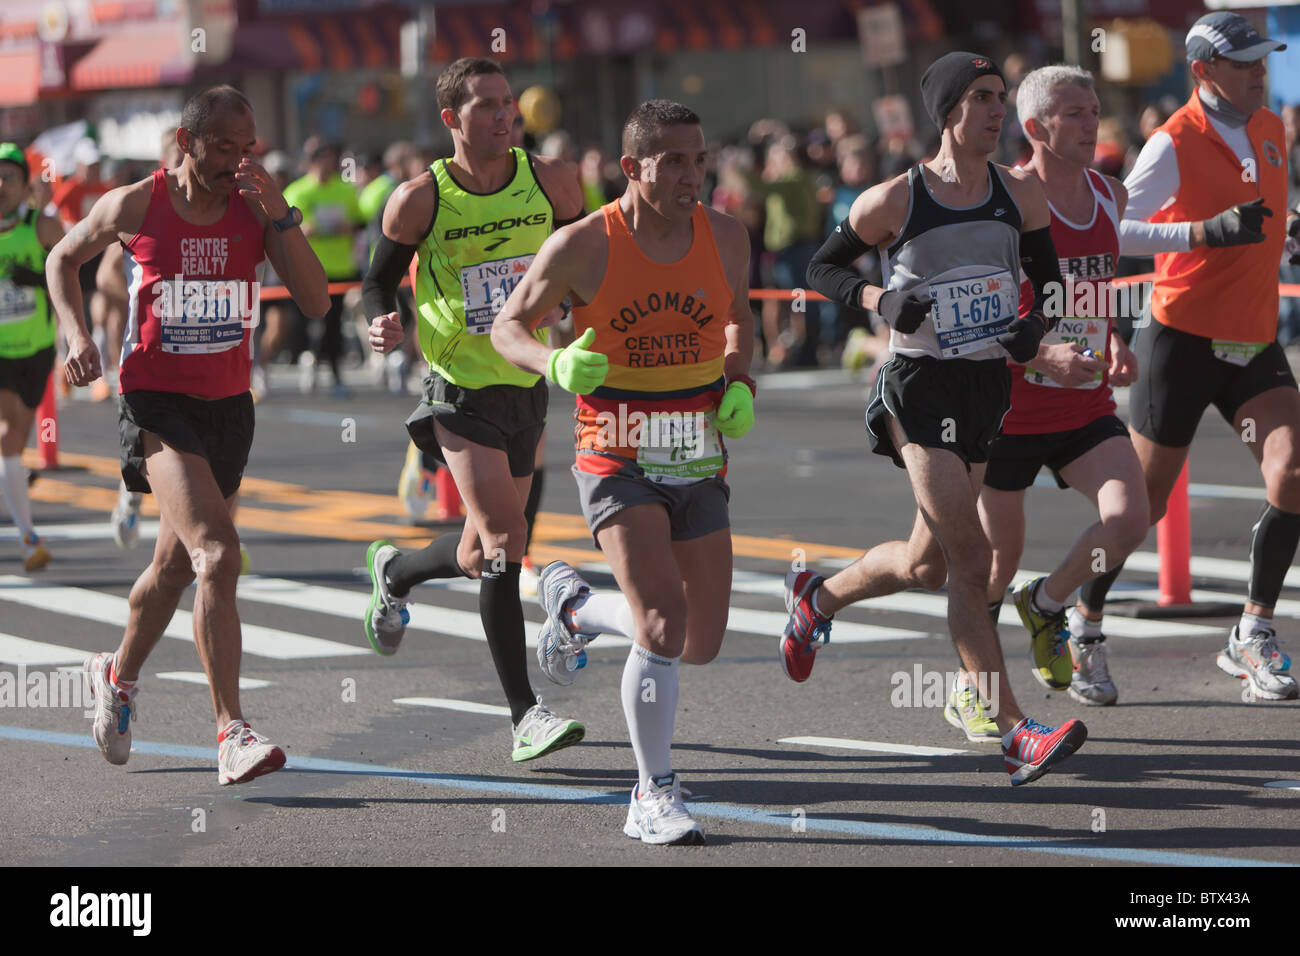 Indalecio Rodriguez (7230), Andy Gardner (1414), William Pedraza (755), Britton Costa (1679), and Thomas Noonan (730) in the New York City Marathon. Stock Photo